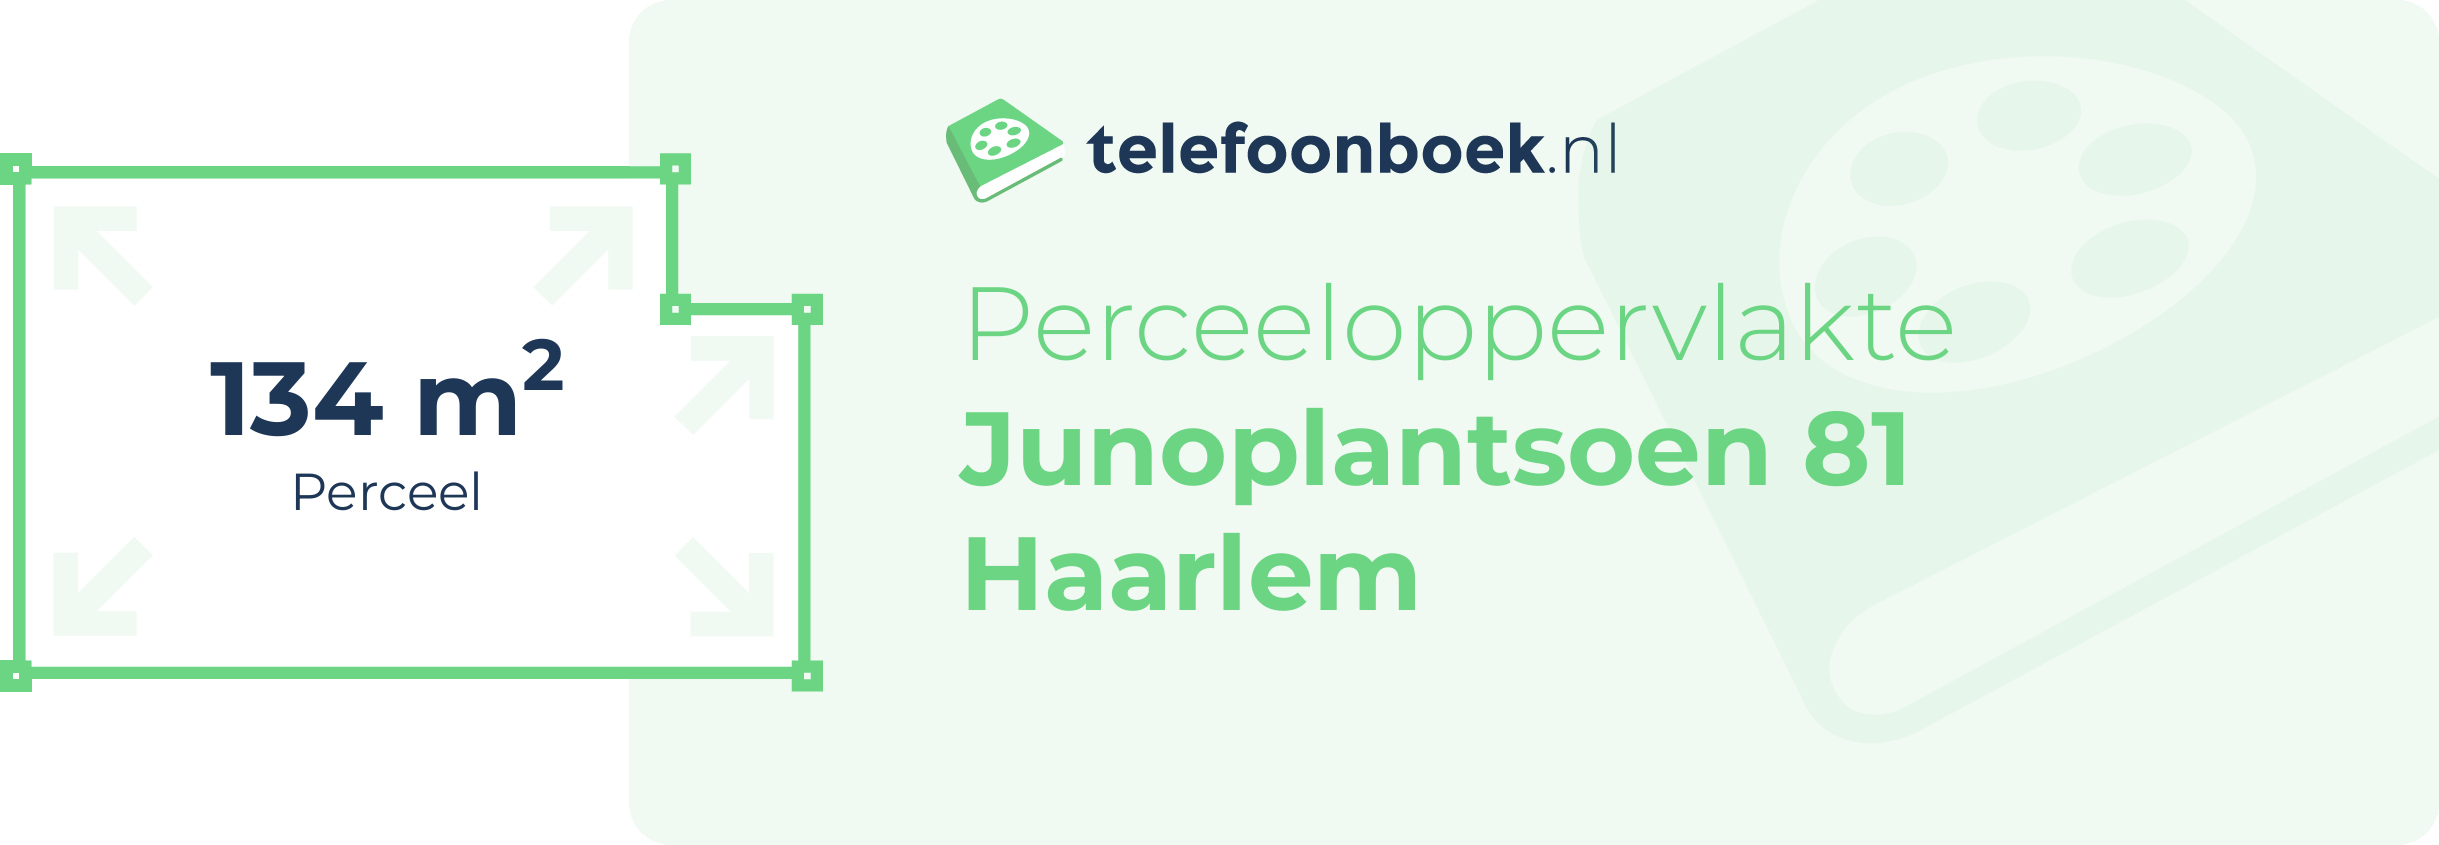 Perceeloppervlakte Junoplantsoen 81 Haarlem